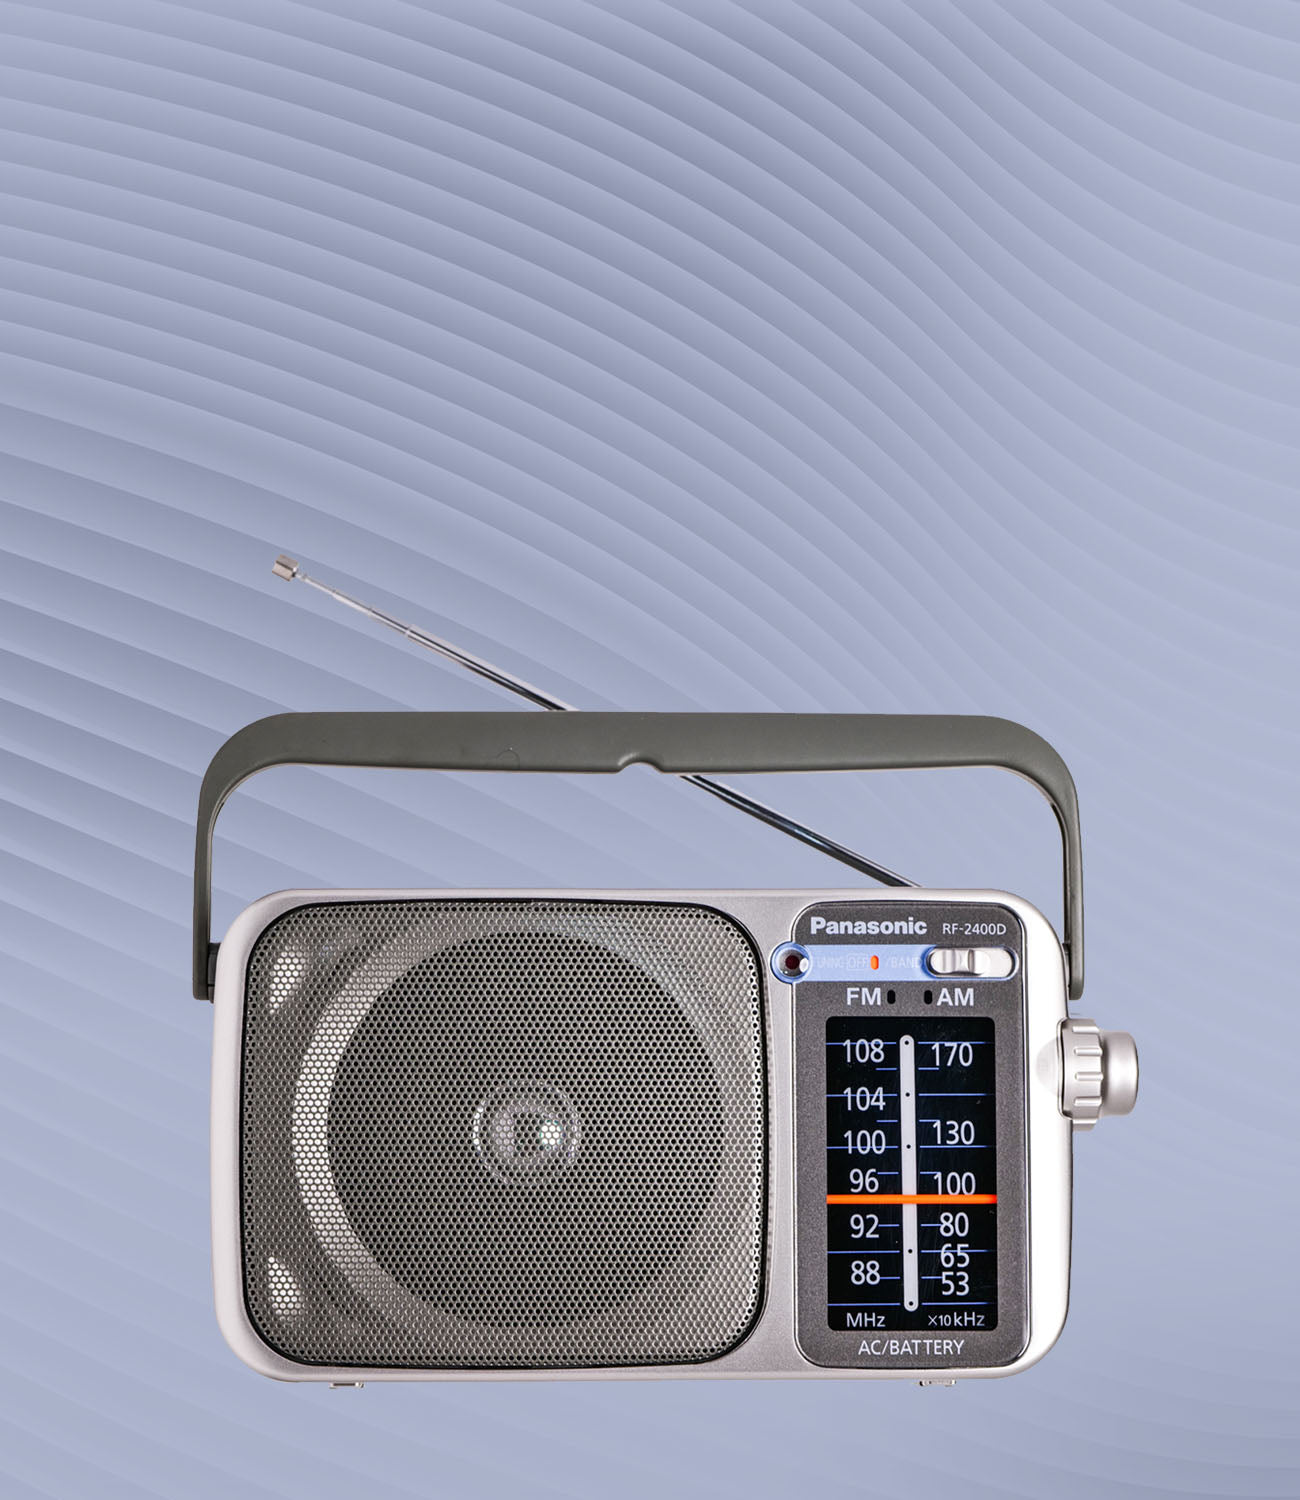 Panasonic RF-2400D Portable FM/AM Radio with AFC Tuner RF-2400